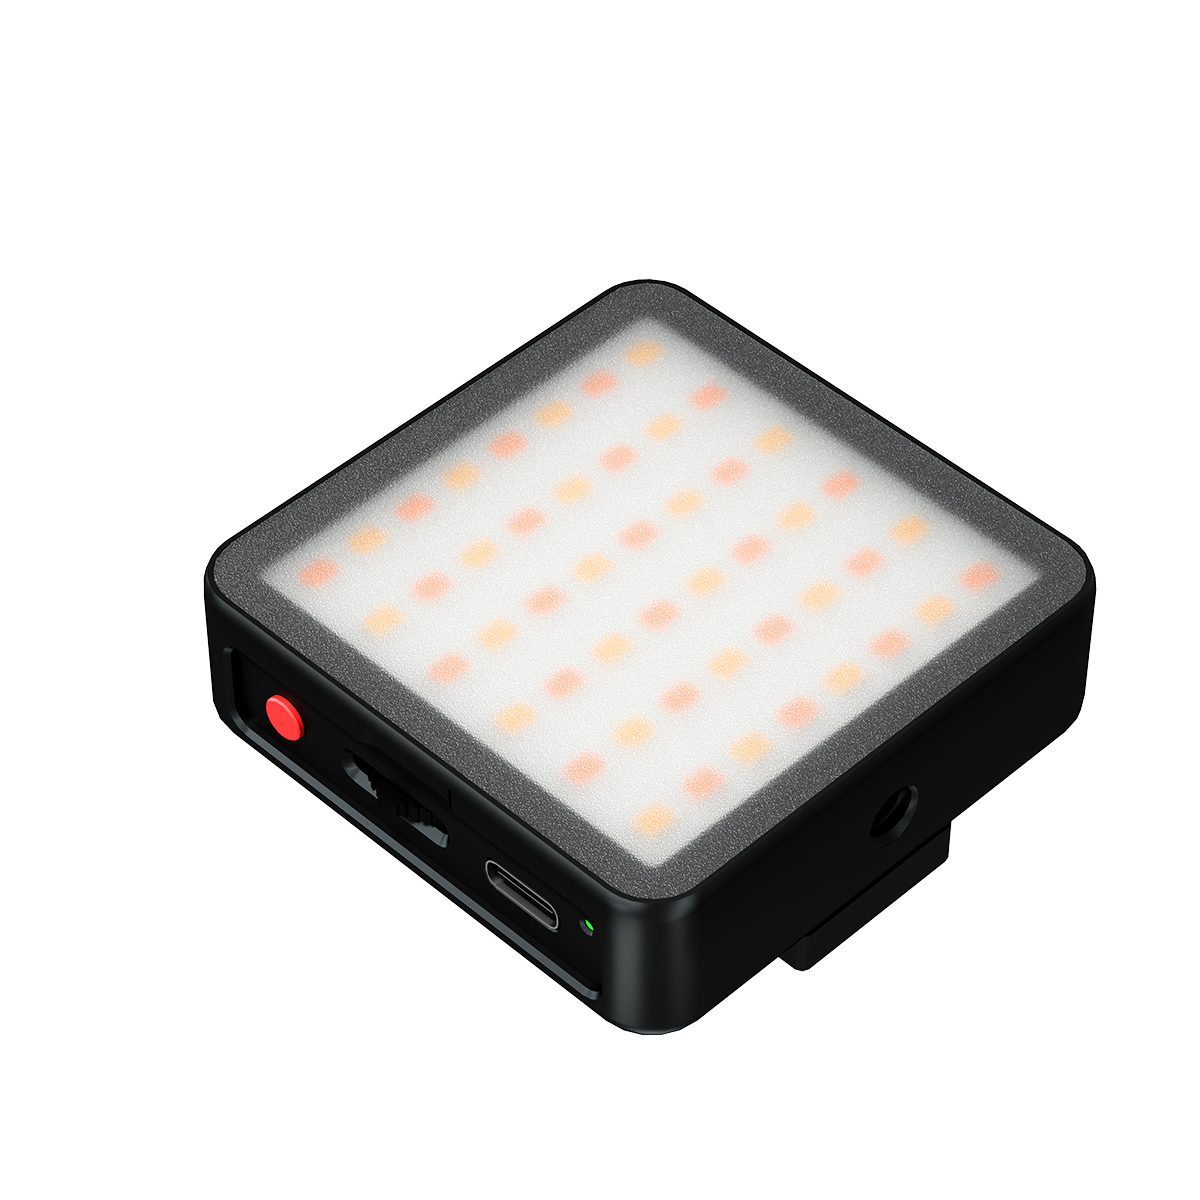 LED Video Light R3s